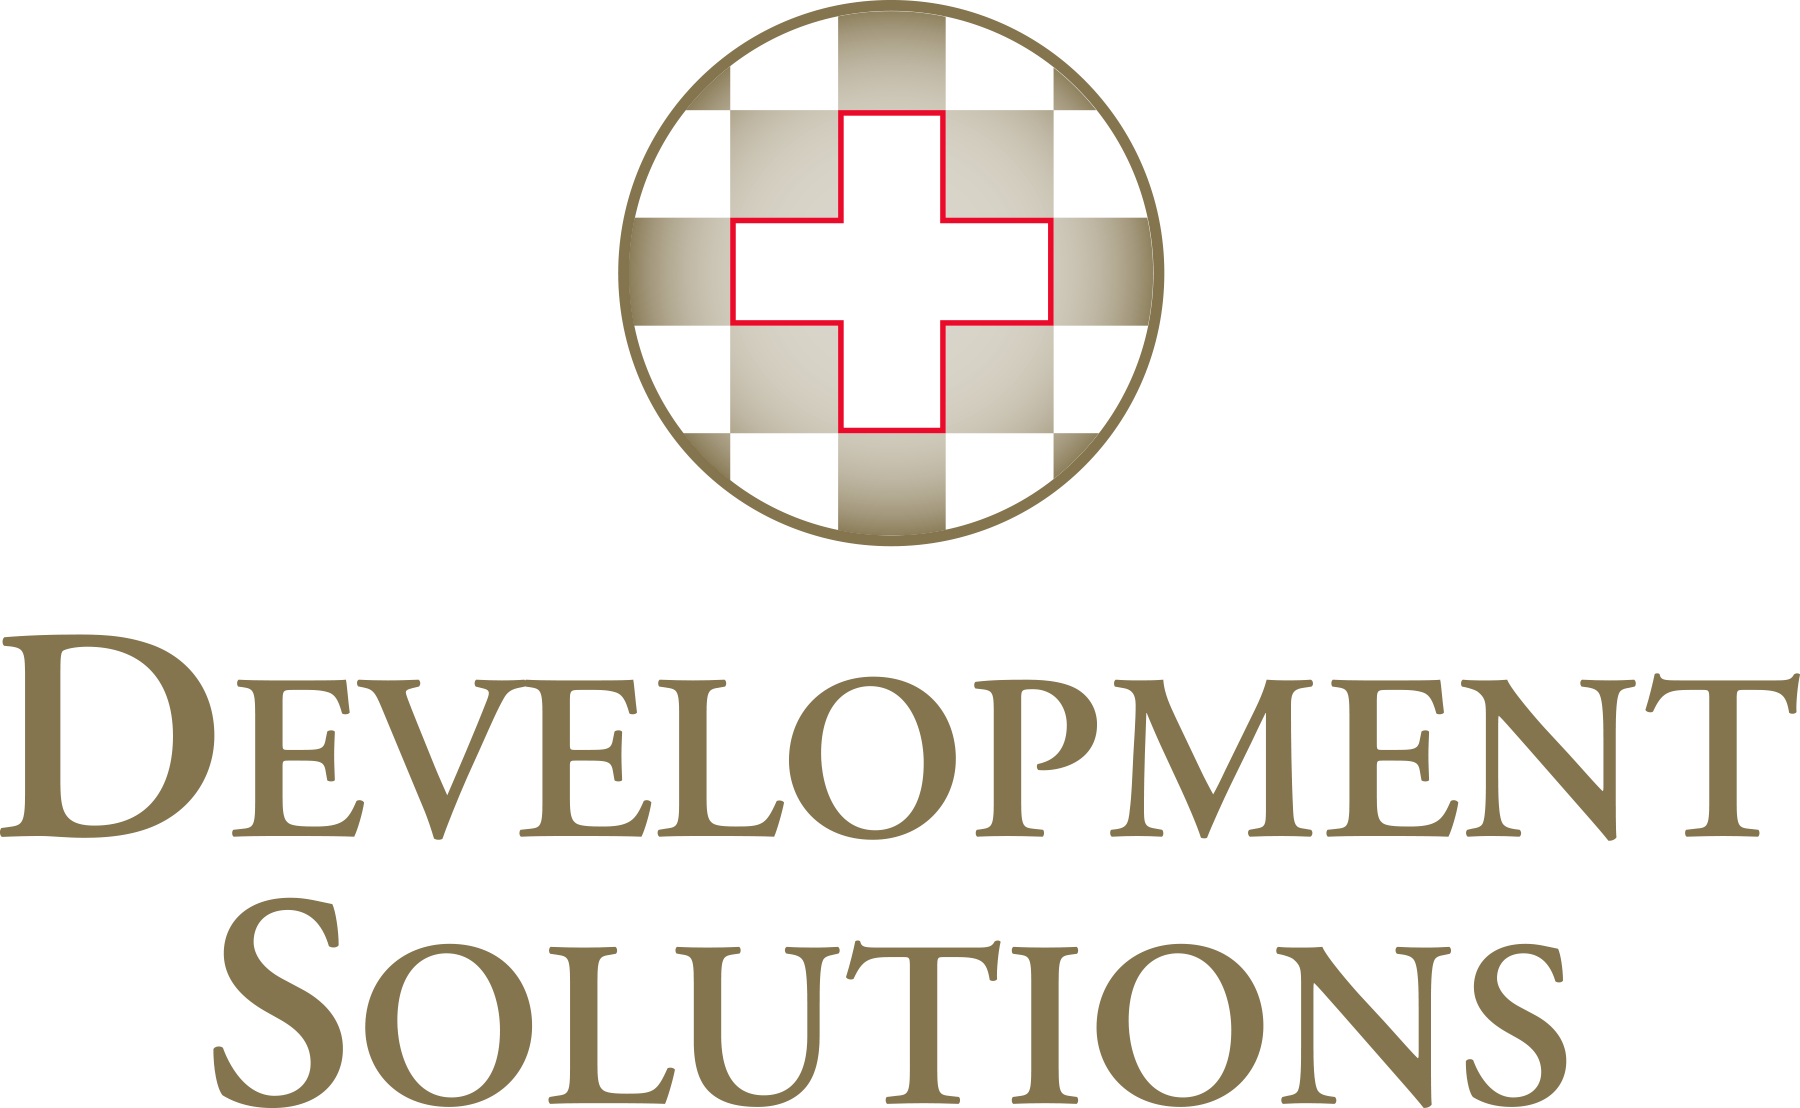 Development Solutions